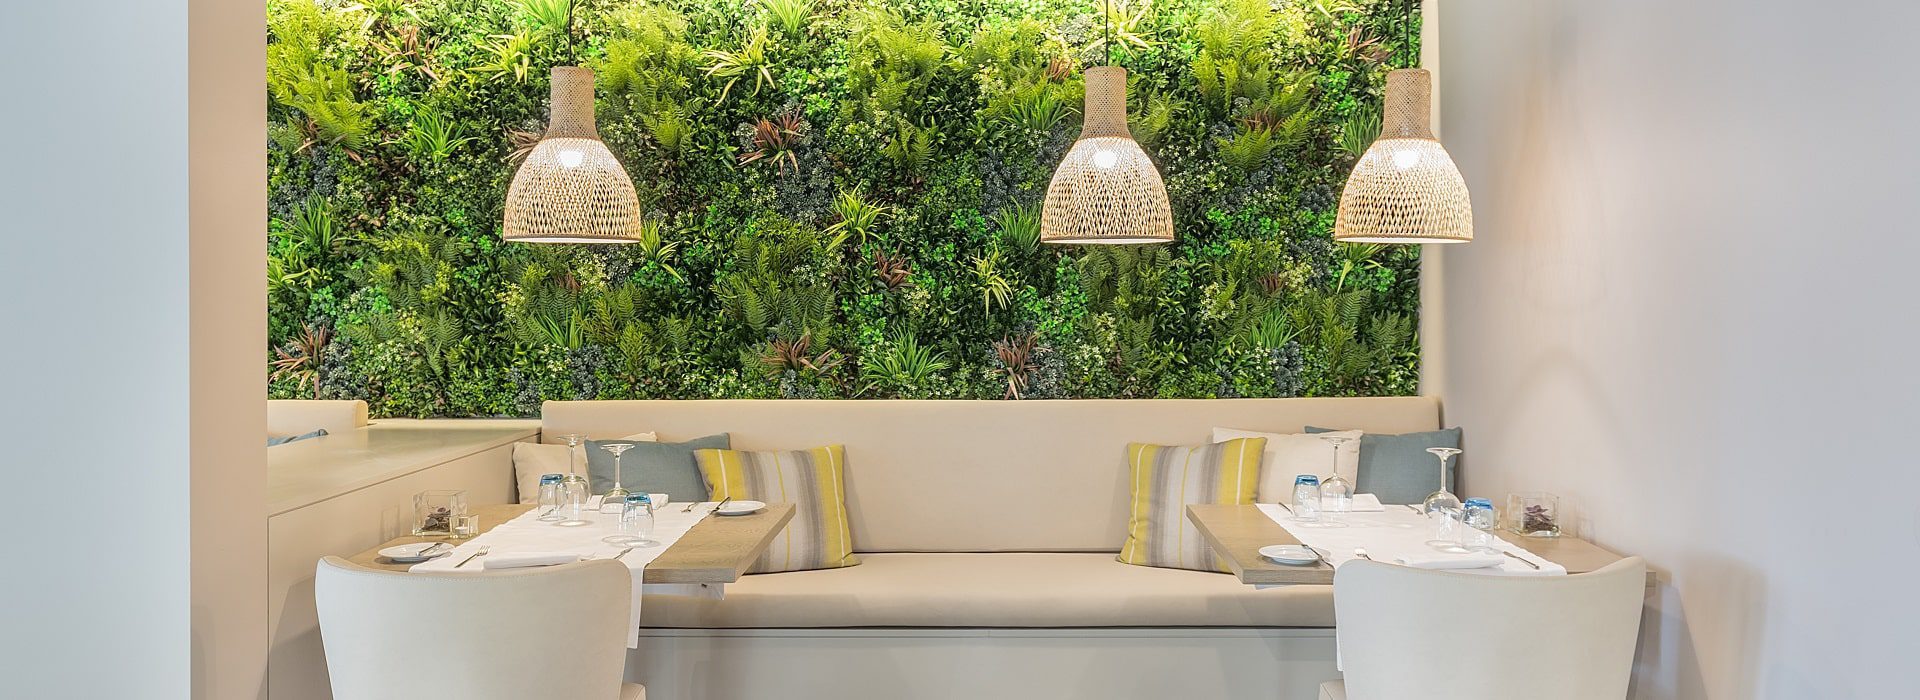 Restaurant Interior Design Green Wall